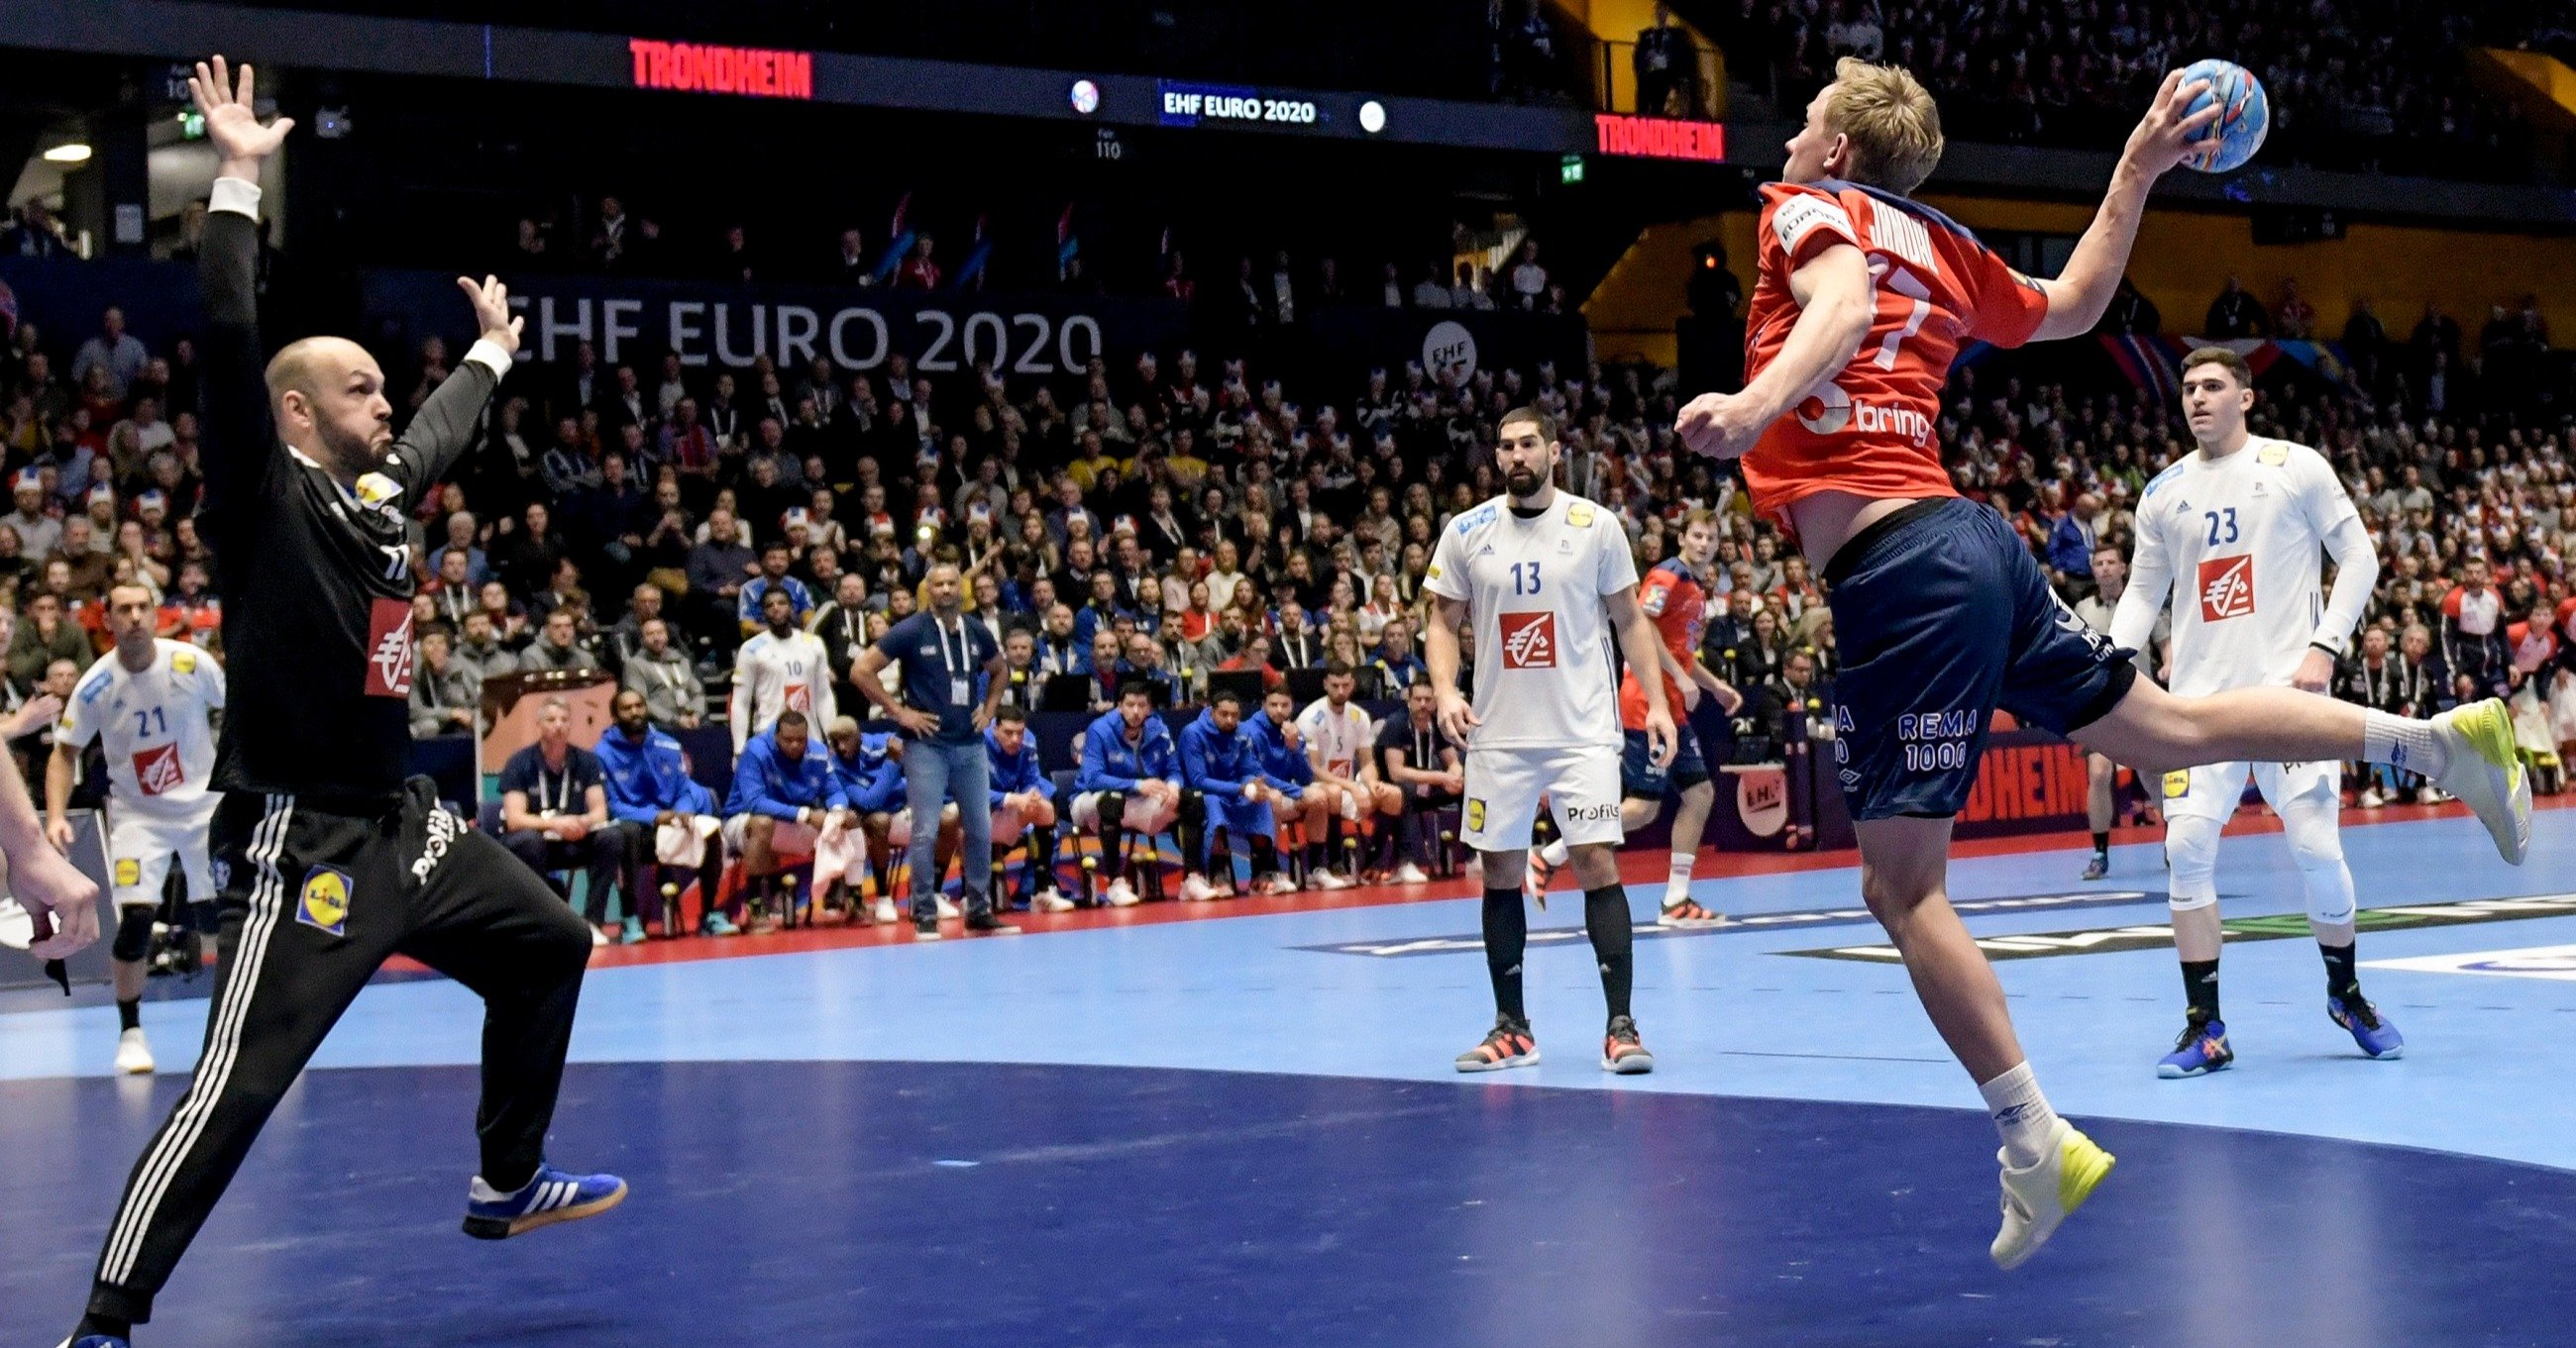 sports event marketing operations - EHF Euro 2020